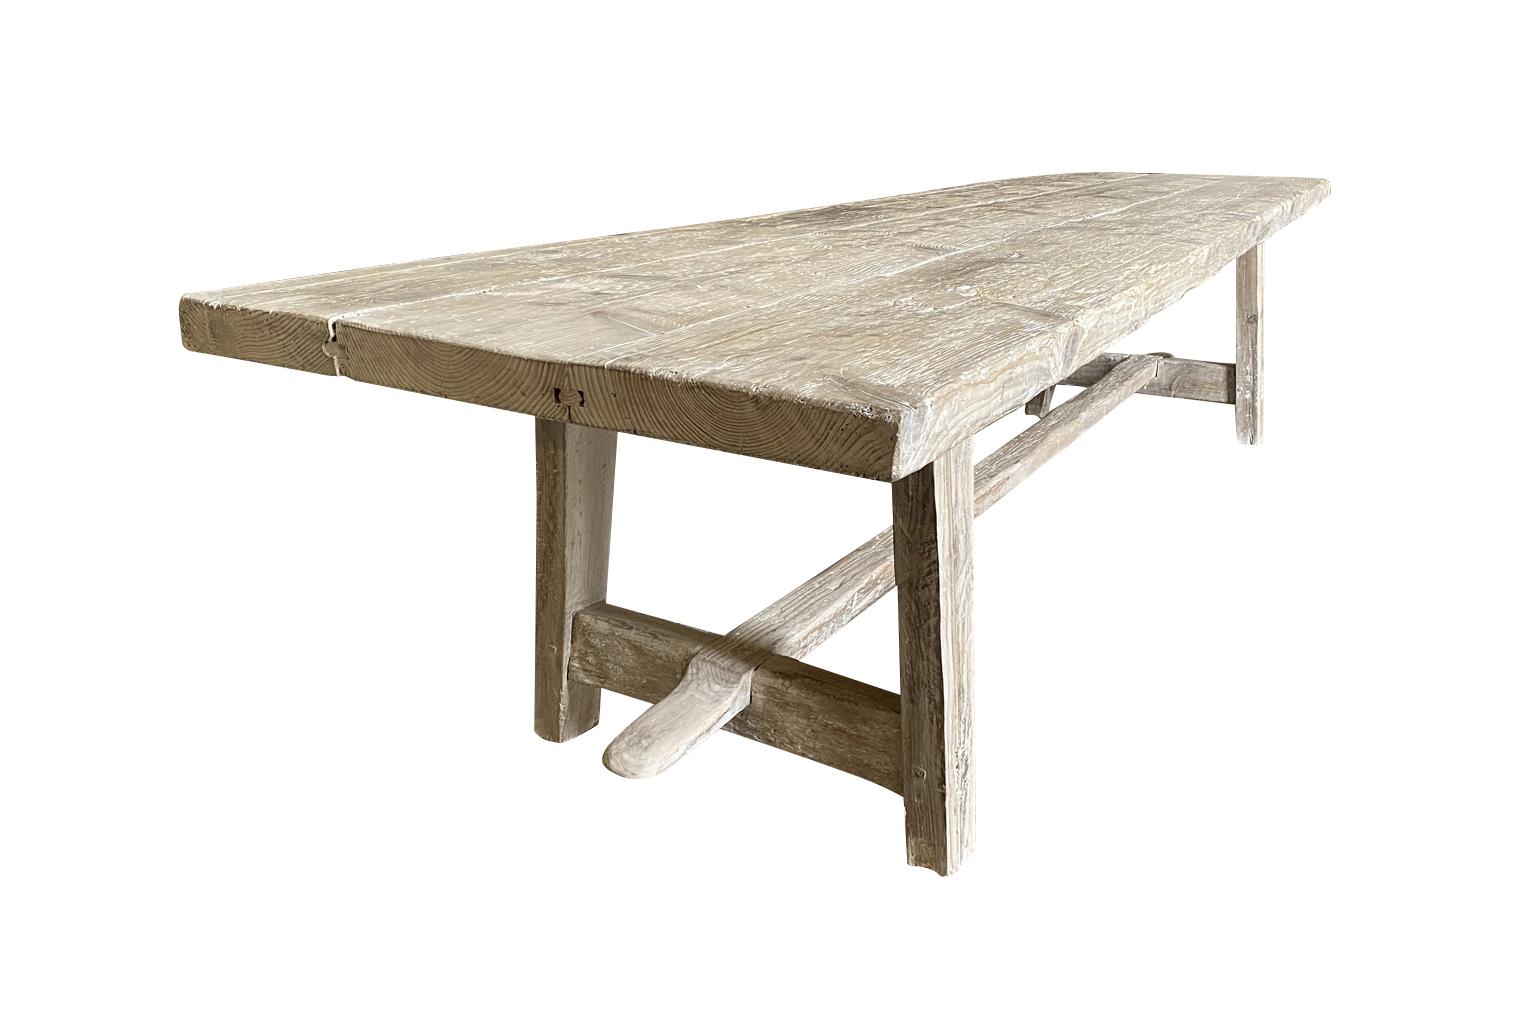 Contemporary Spanish Trestle Table, Farm Table